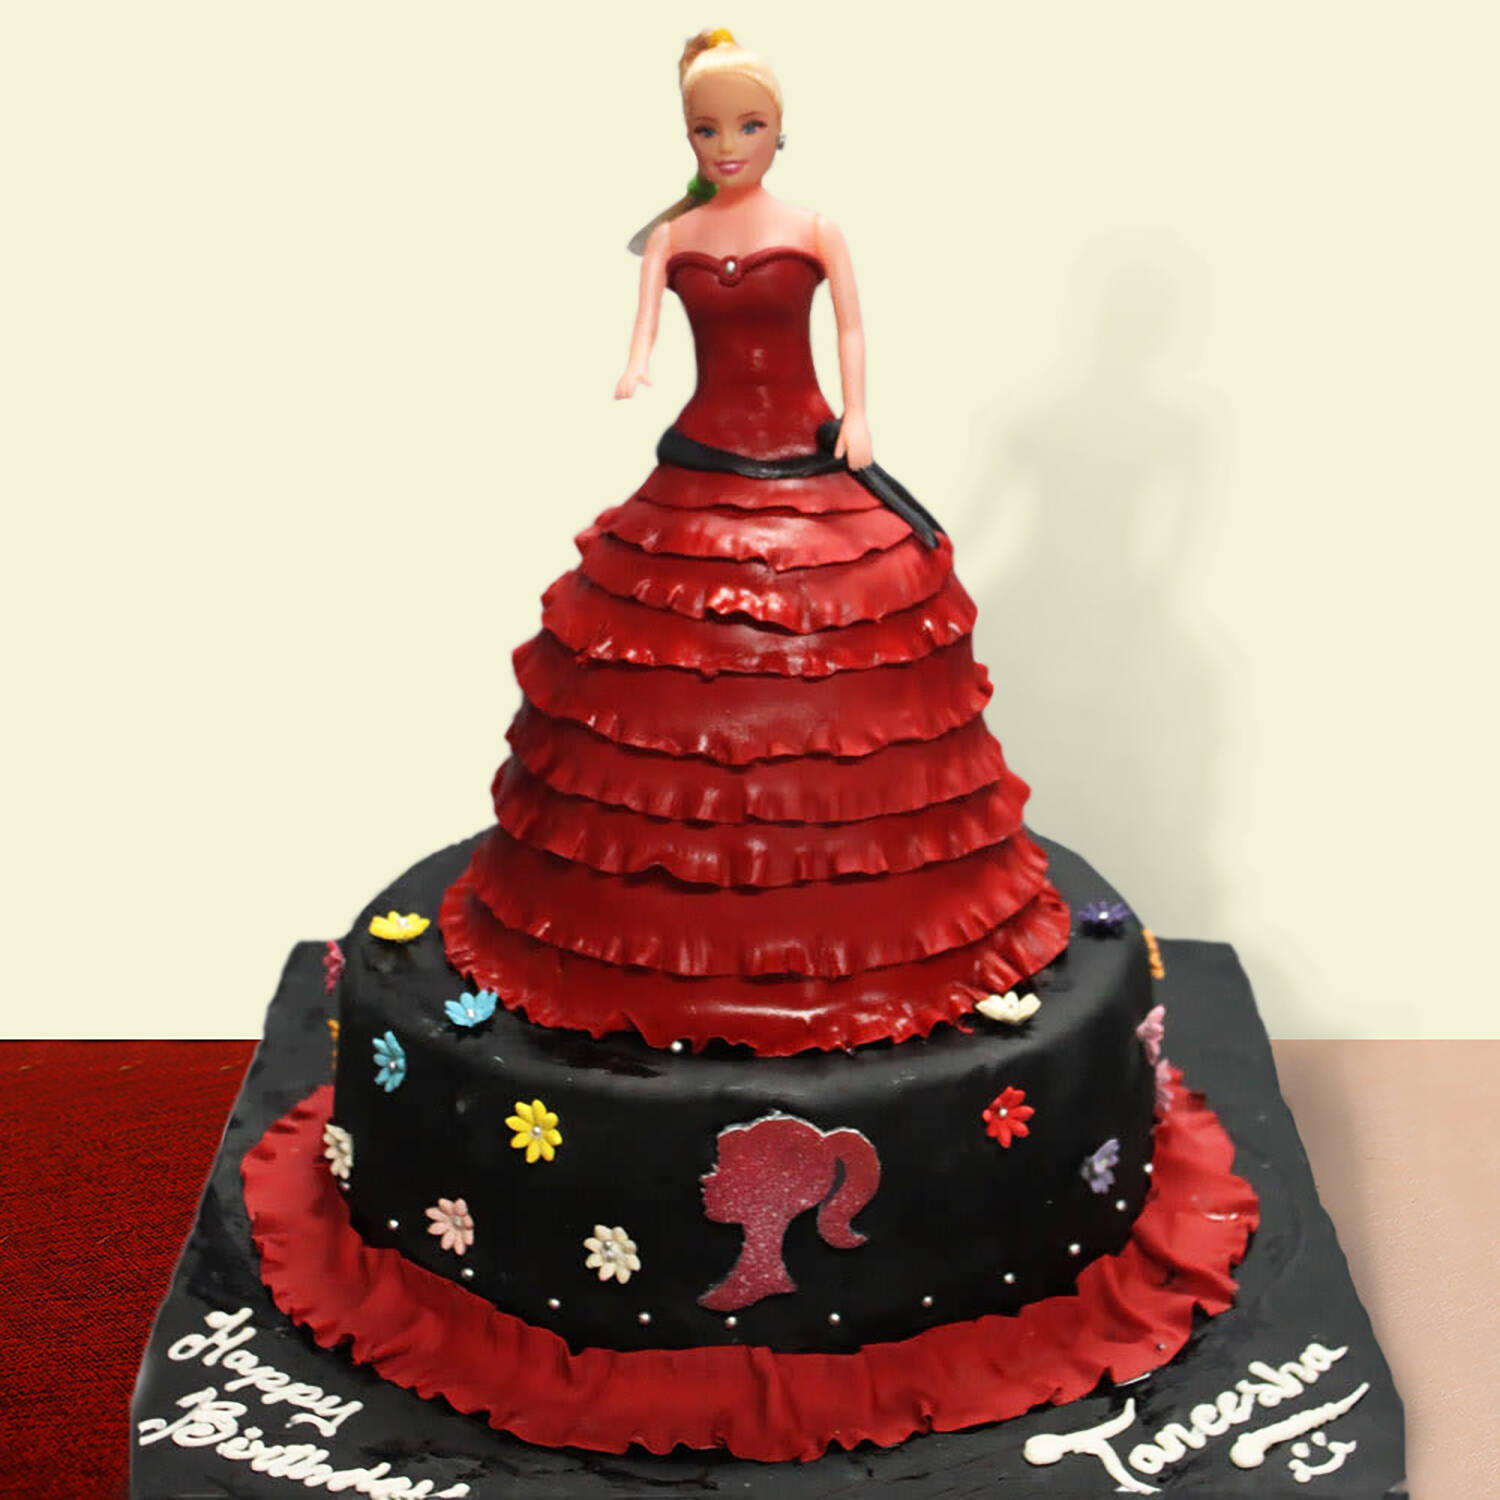 Buy/Send Black Cake Currant Online @ Rs. 3569 - SendBestGift